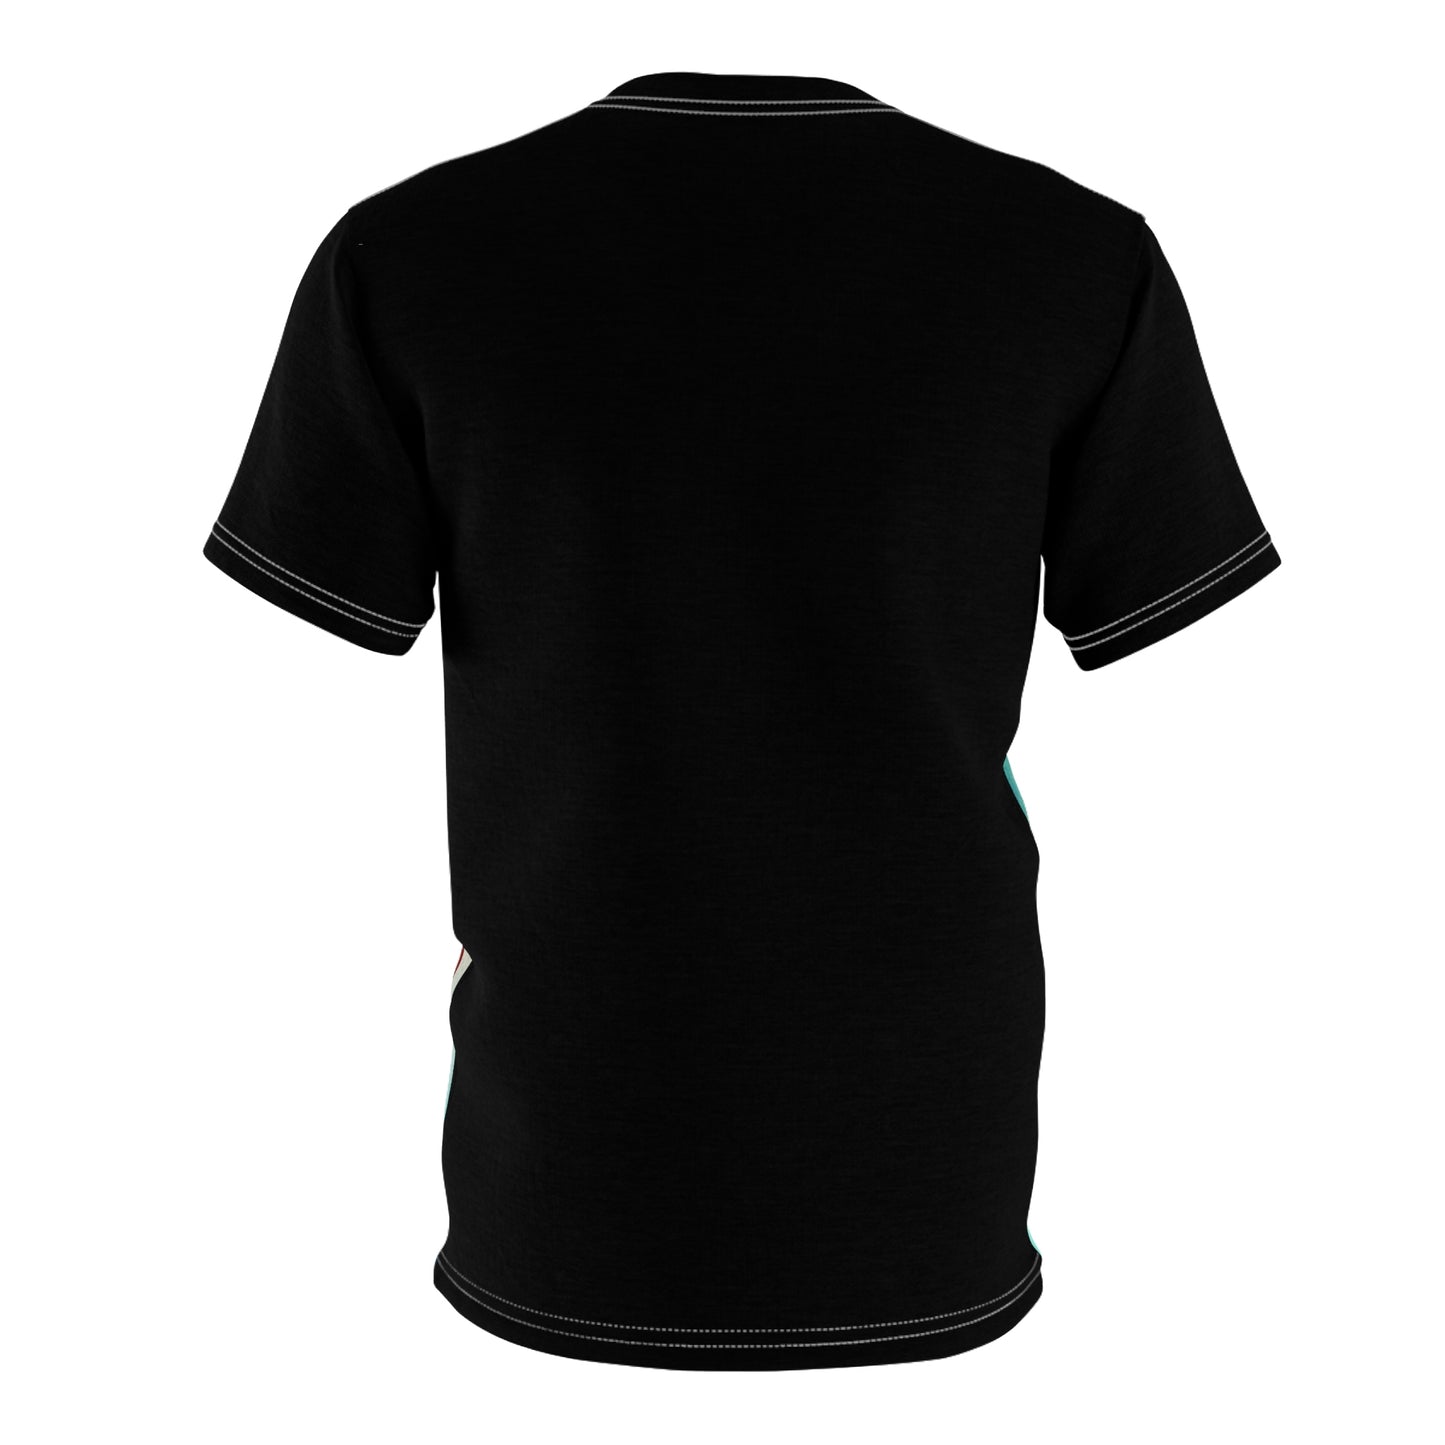 Penniless Souls - Unisex All-Over Print Cut & Sew T-Shirt